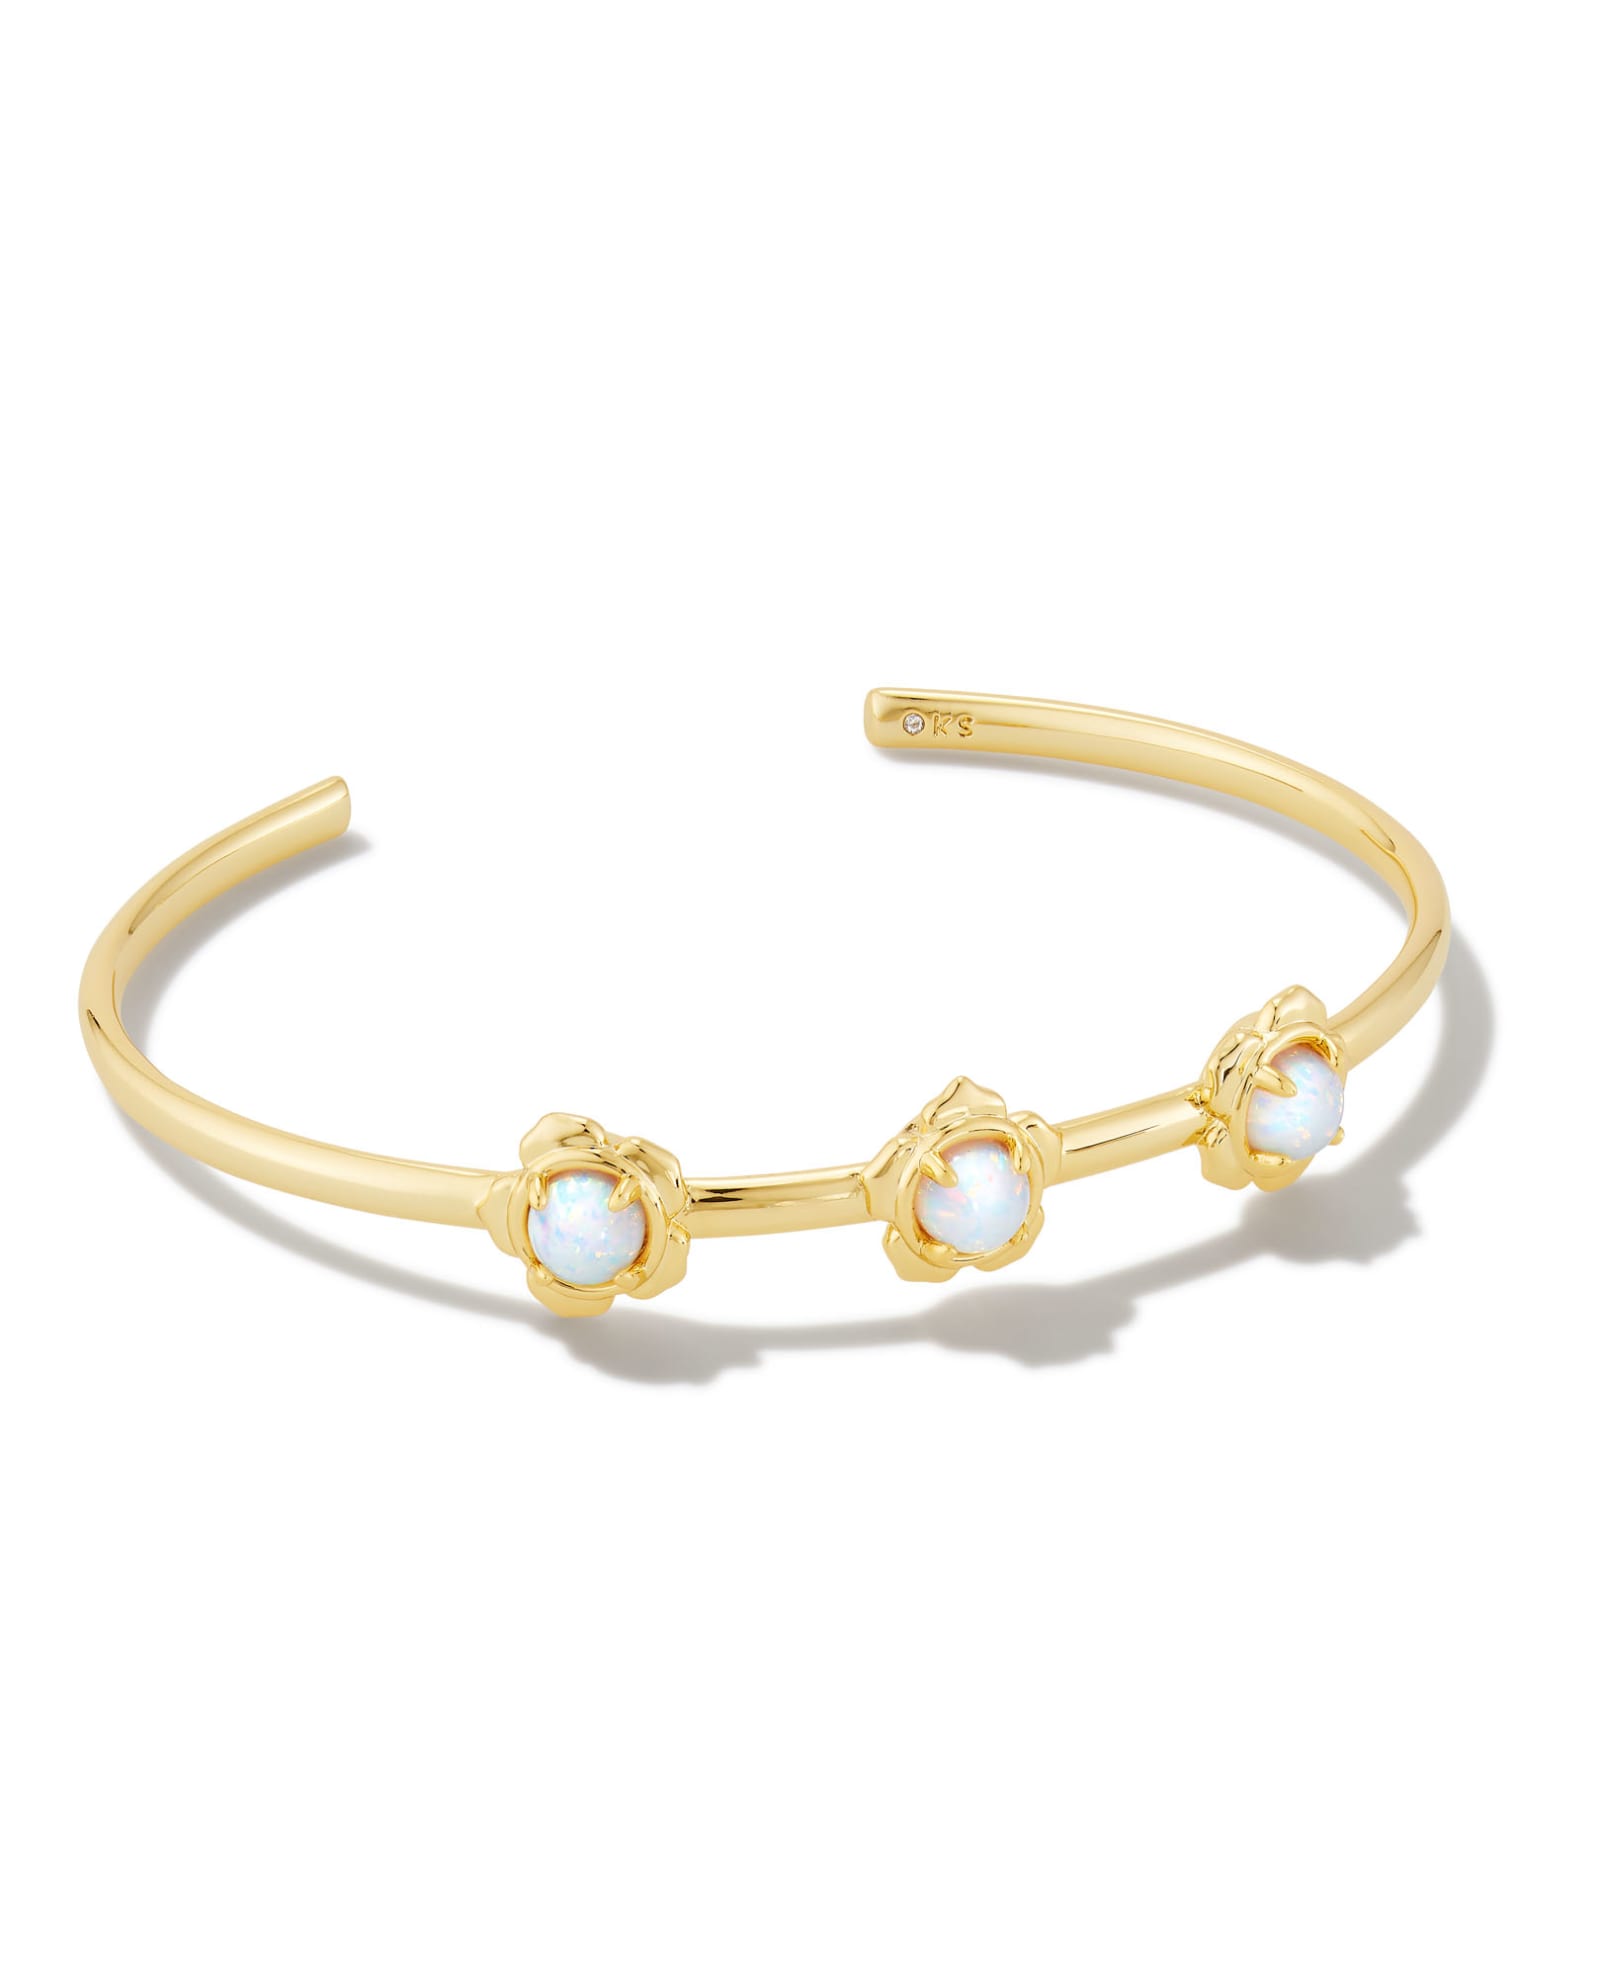 Susie Gold Cuff Bracelet in Bright White Kyocera Opal